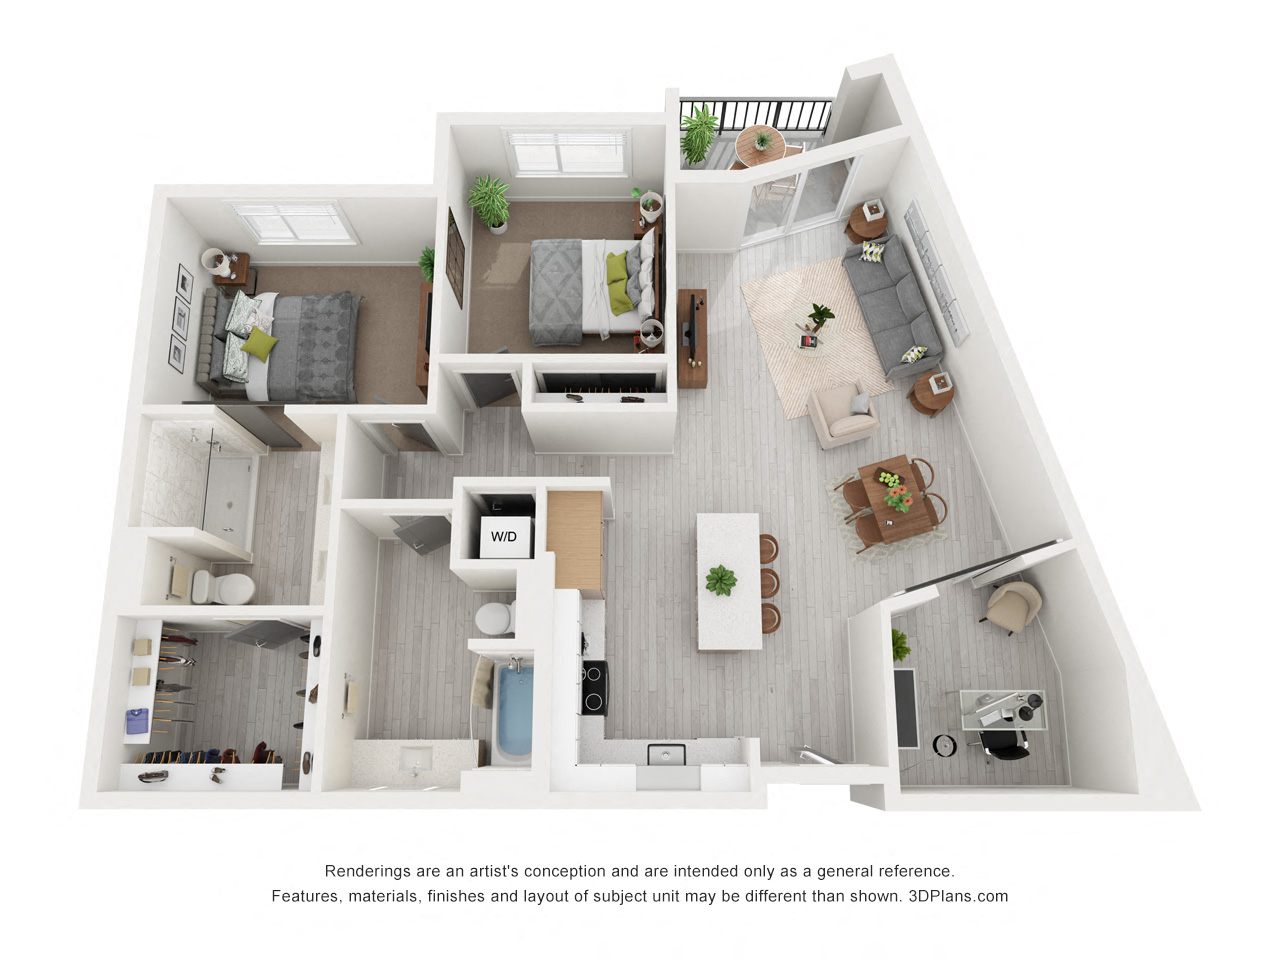 The Eisley_B5 2 bedroom floor plan